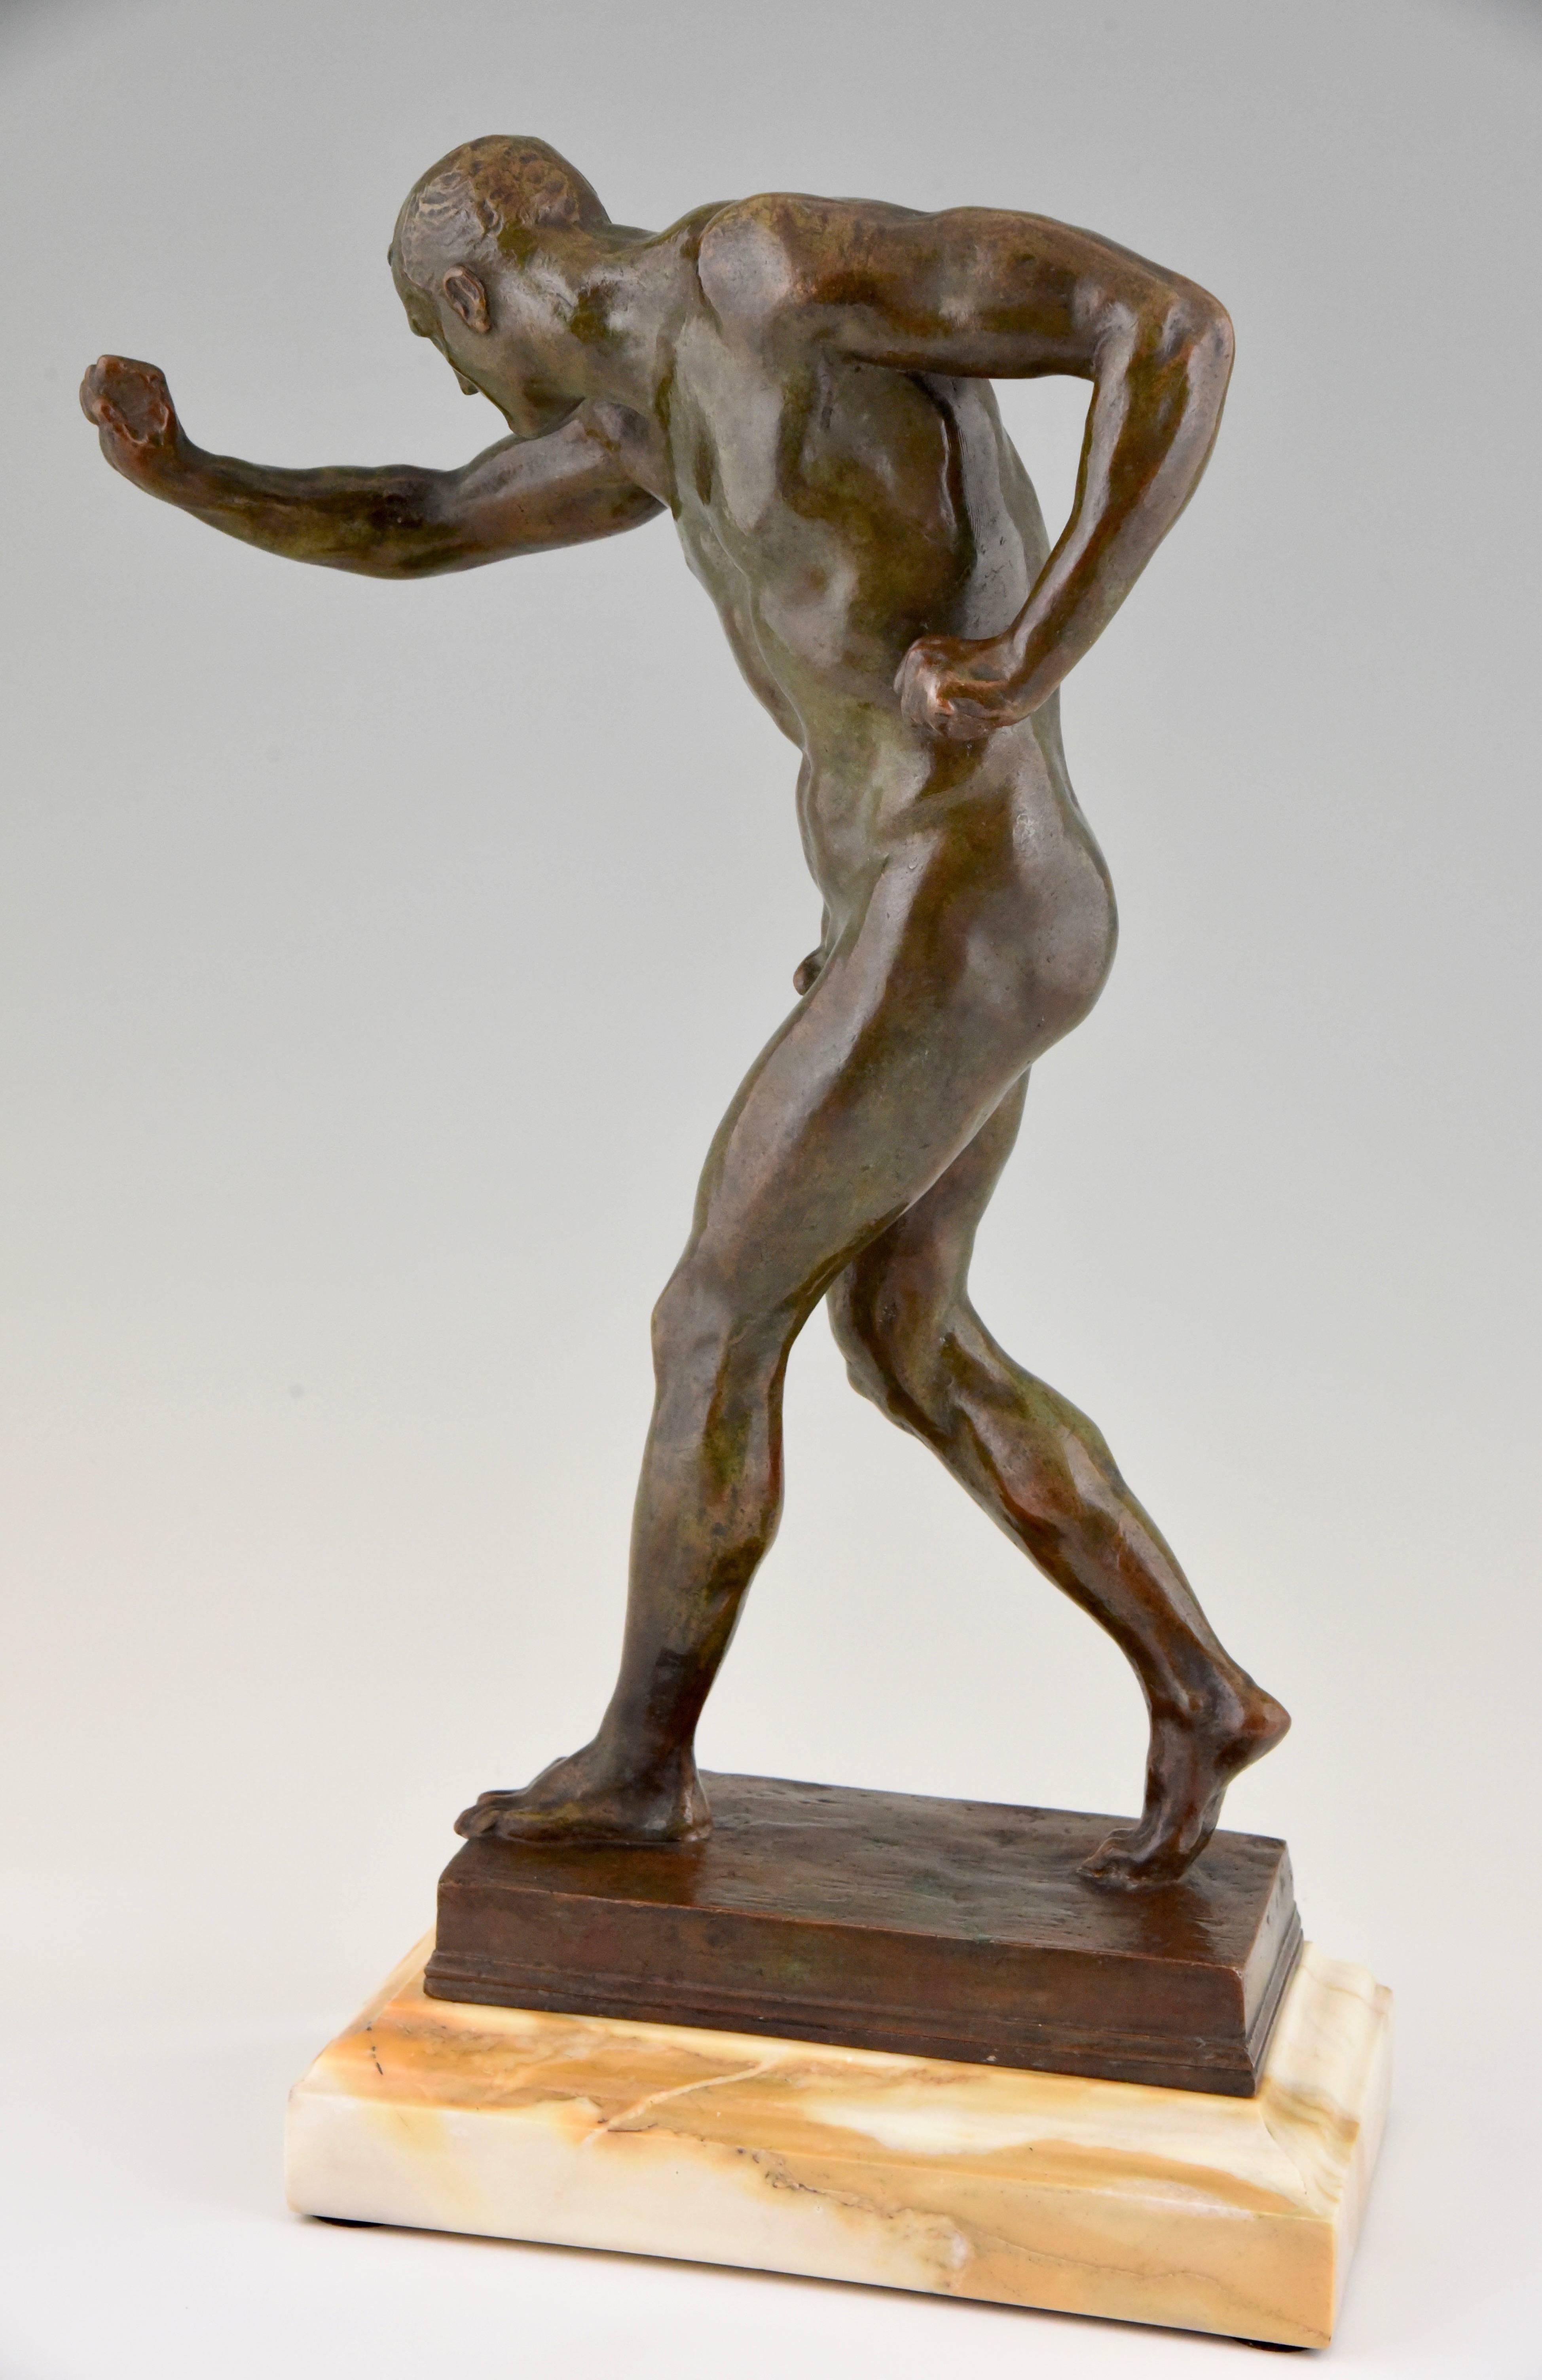 Fine antique Italian bronze sculpture of a male nude athlete.
Artist/ maker: DL or PL
Signature/ marks: Monogram DL or PL
Date: 1900
Material: Bronze on marble base
Origin: Italy
Size: H. 50.5 cm. x L. 36 cm. x W. 16 cm.
H. 19.8 inch x L.